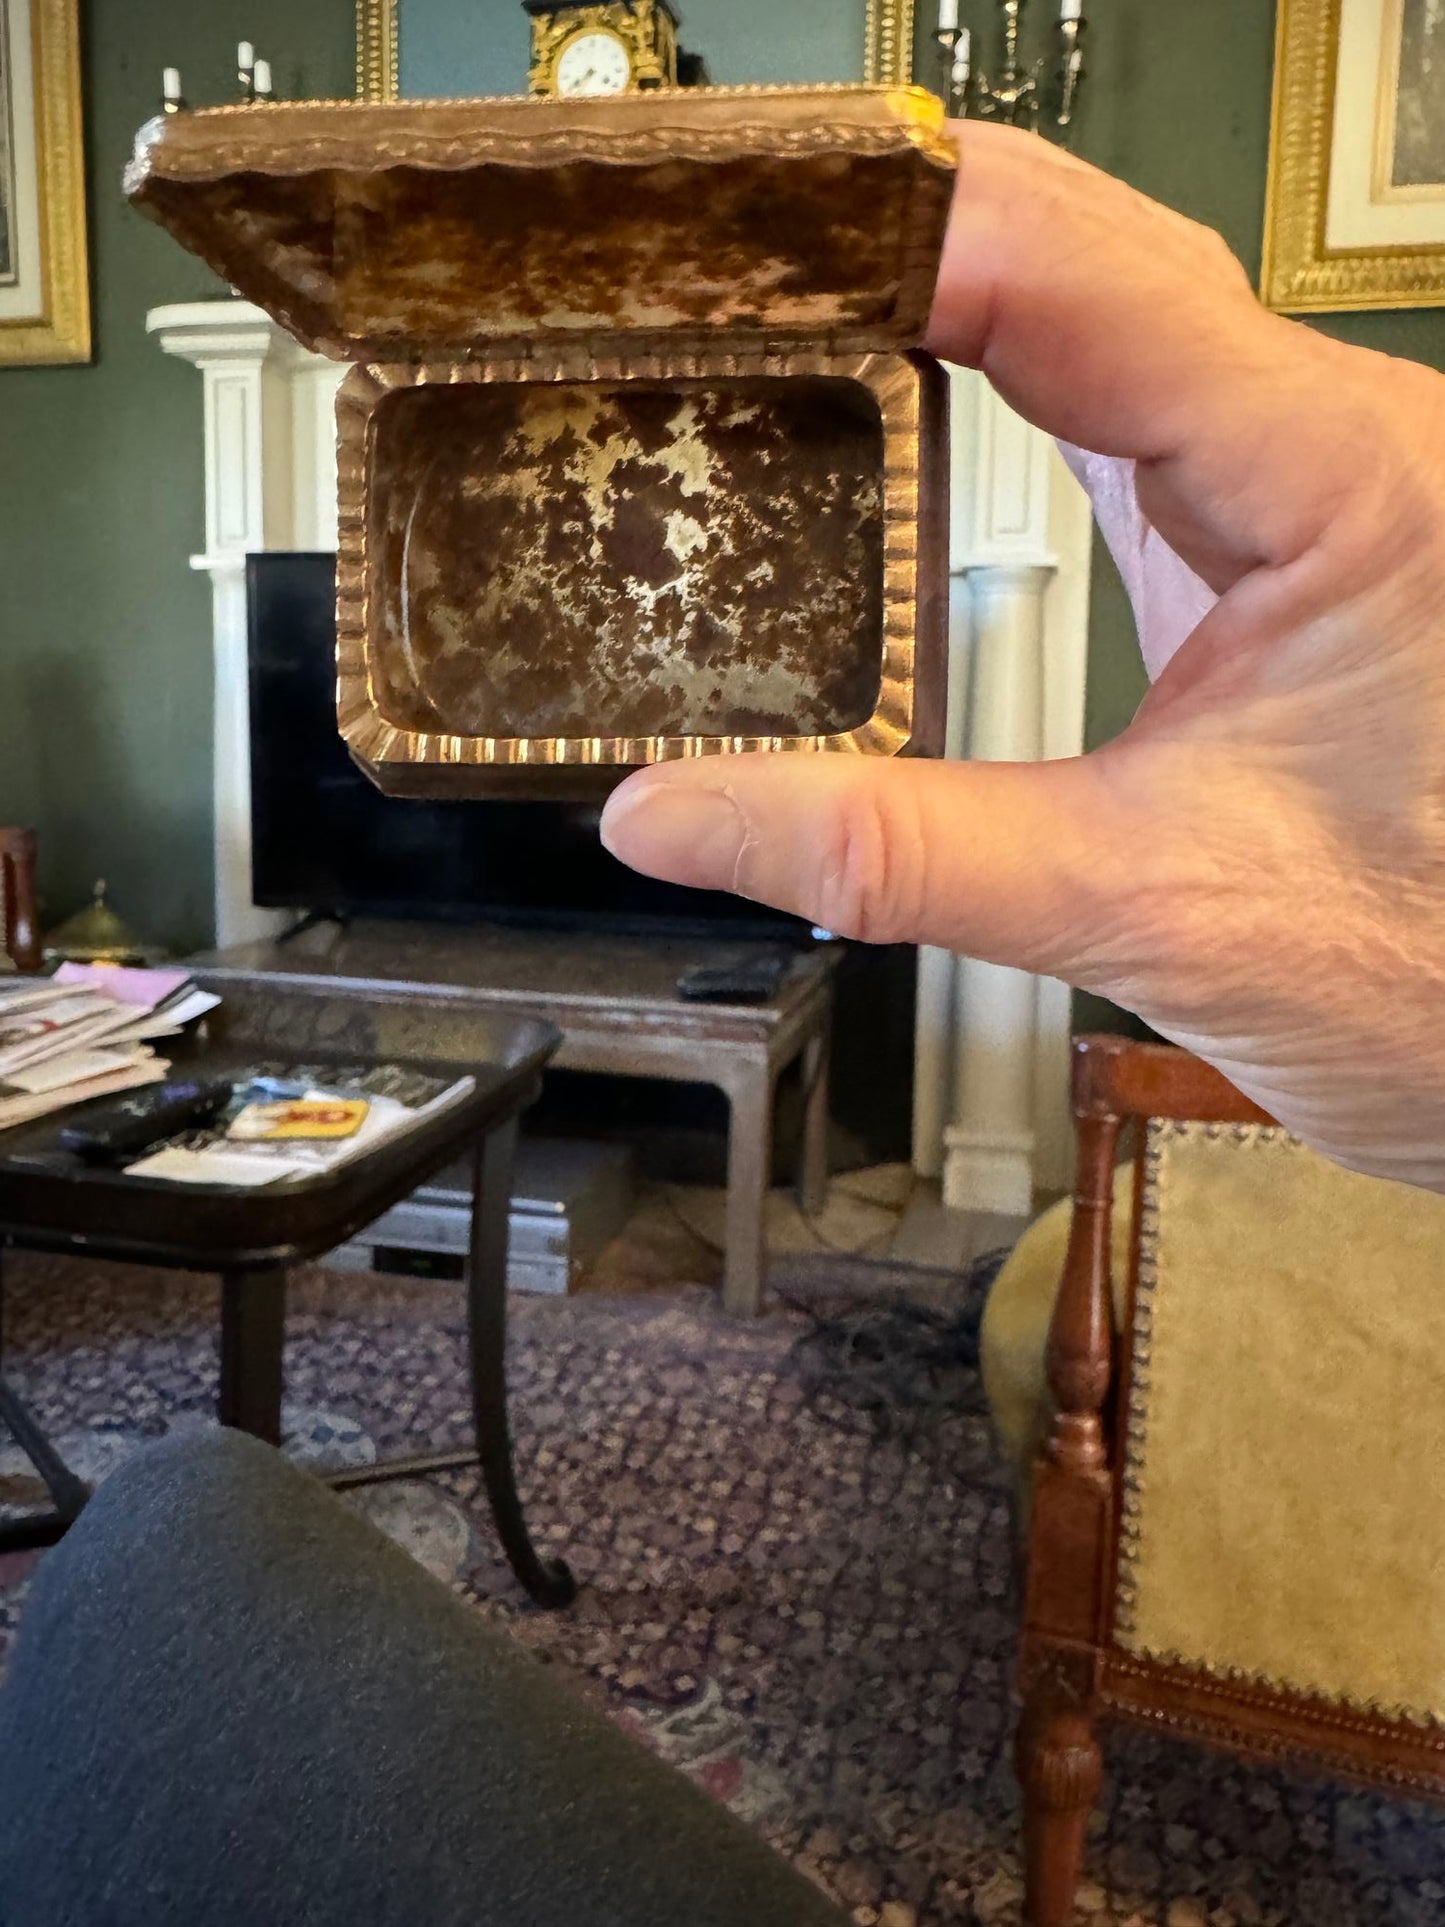 A Gold Mounted Moss Agate Snuff Box